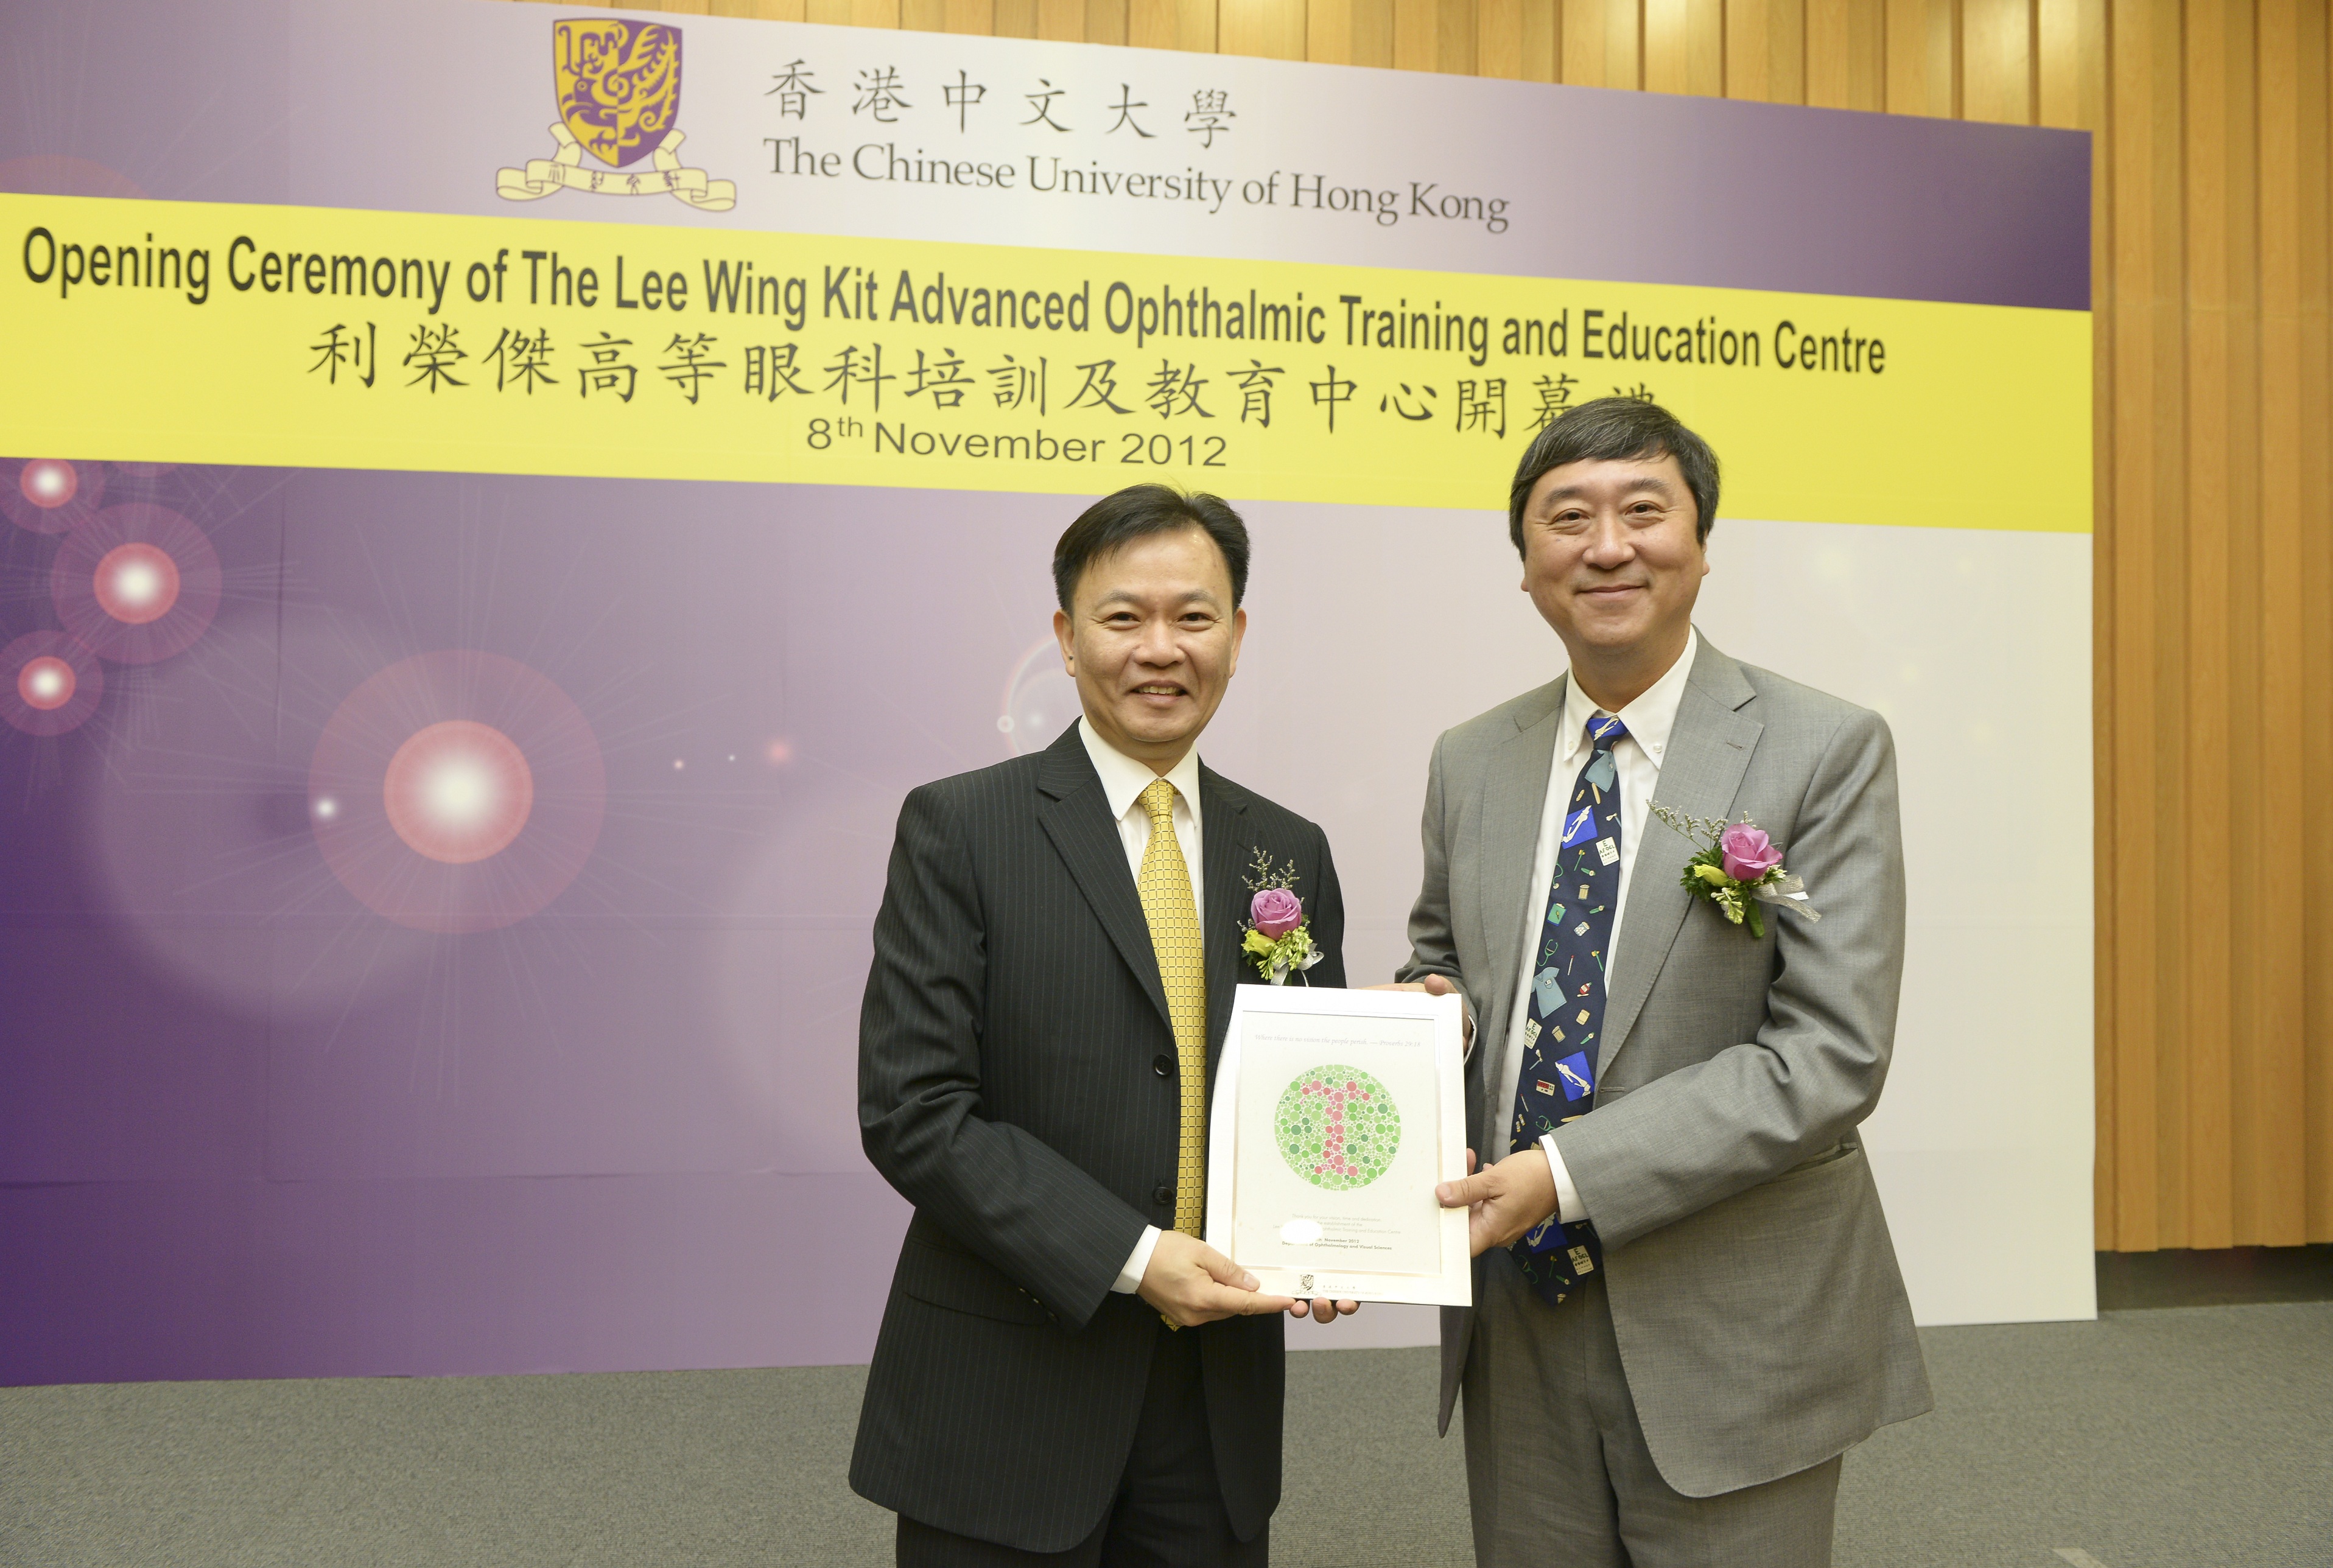 Professor Joseph J Y Sung presents the commemorative souvenir to Dr. P Y Leung